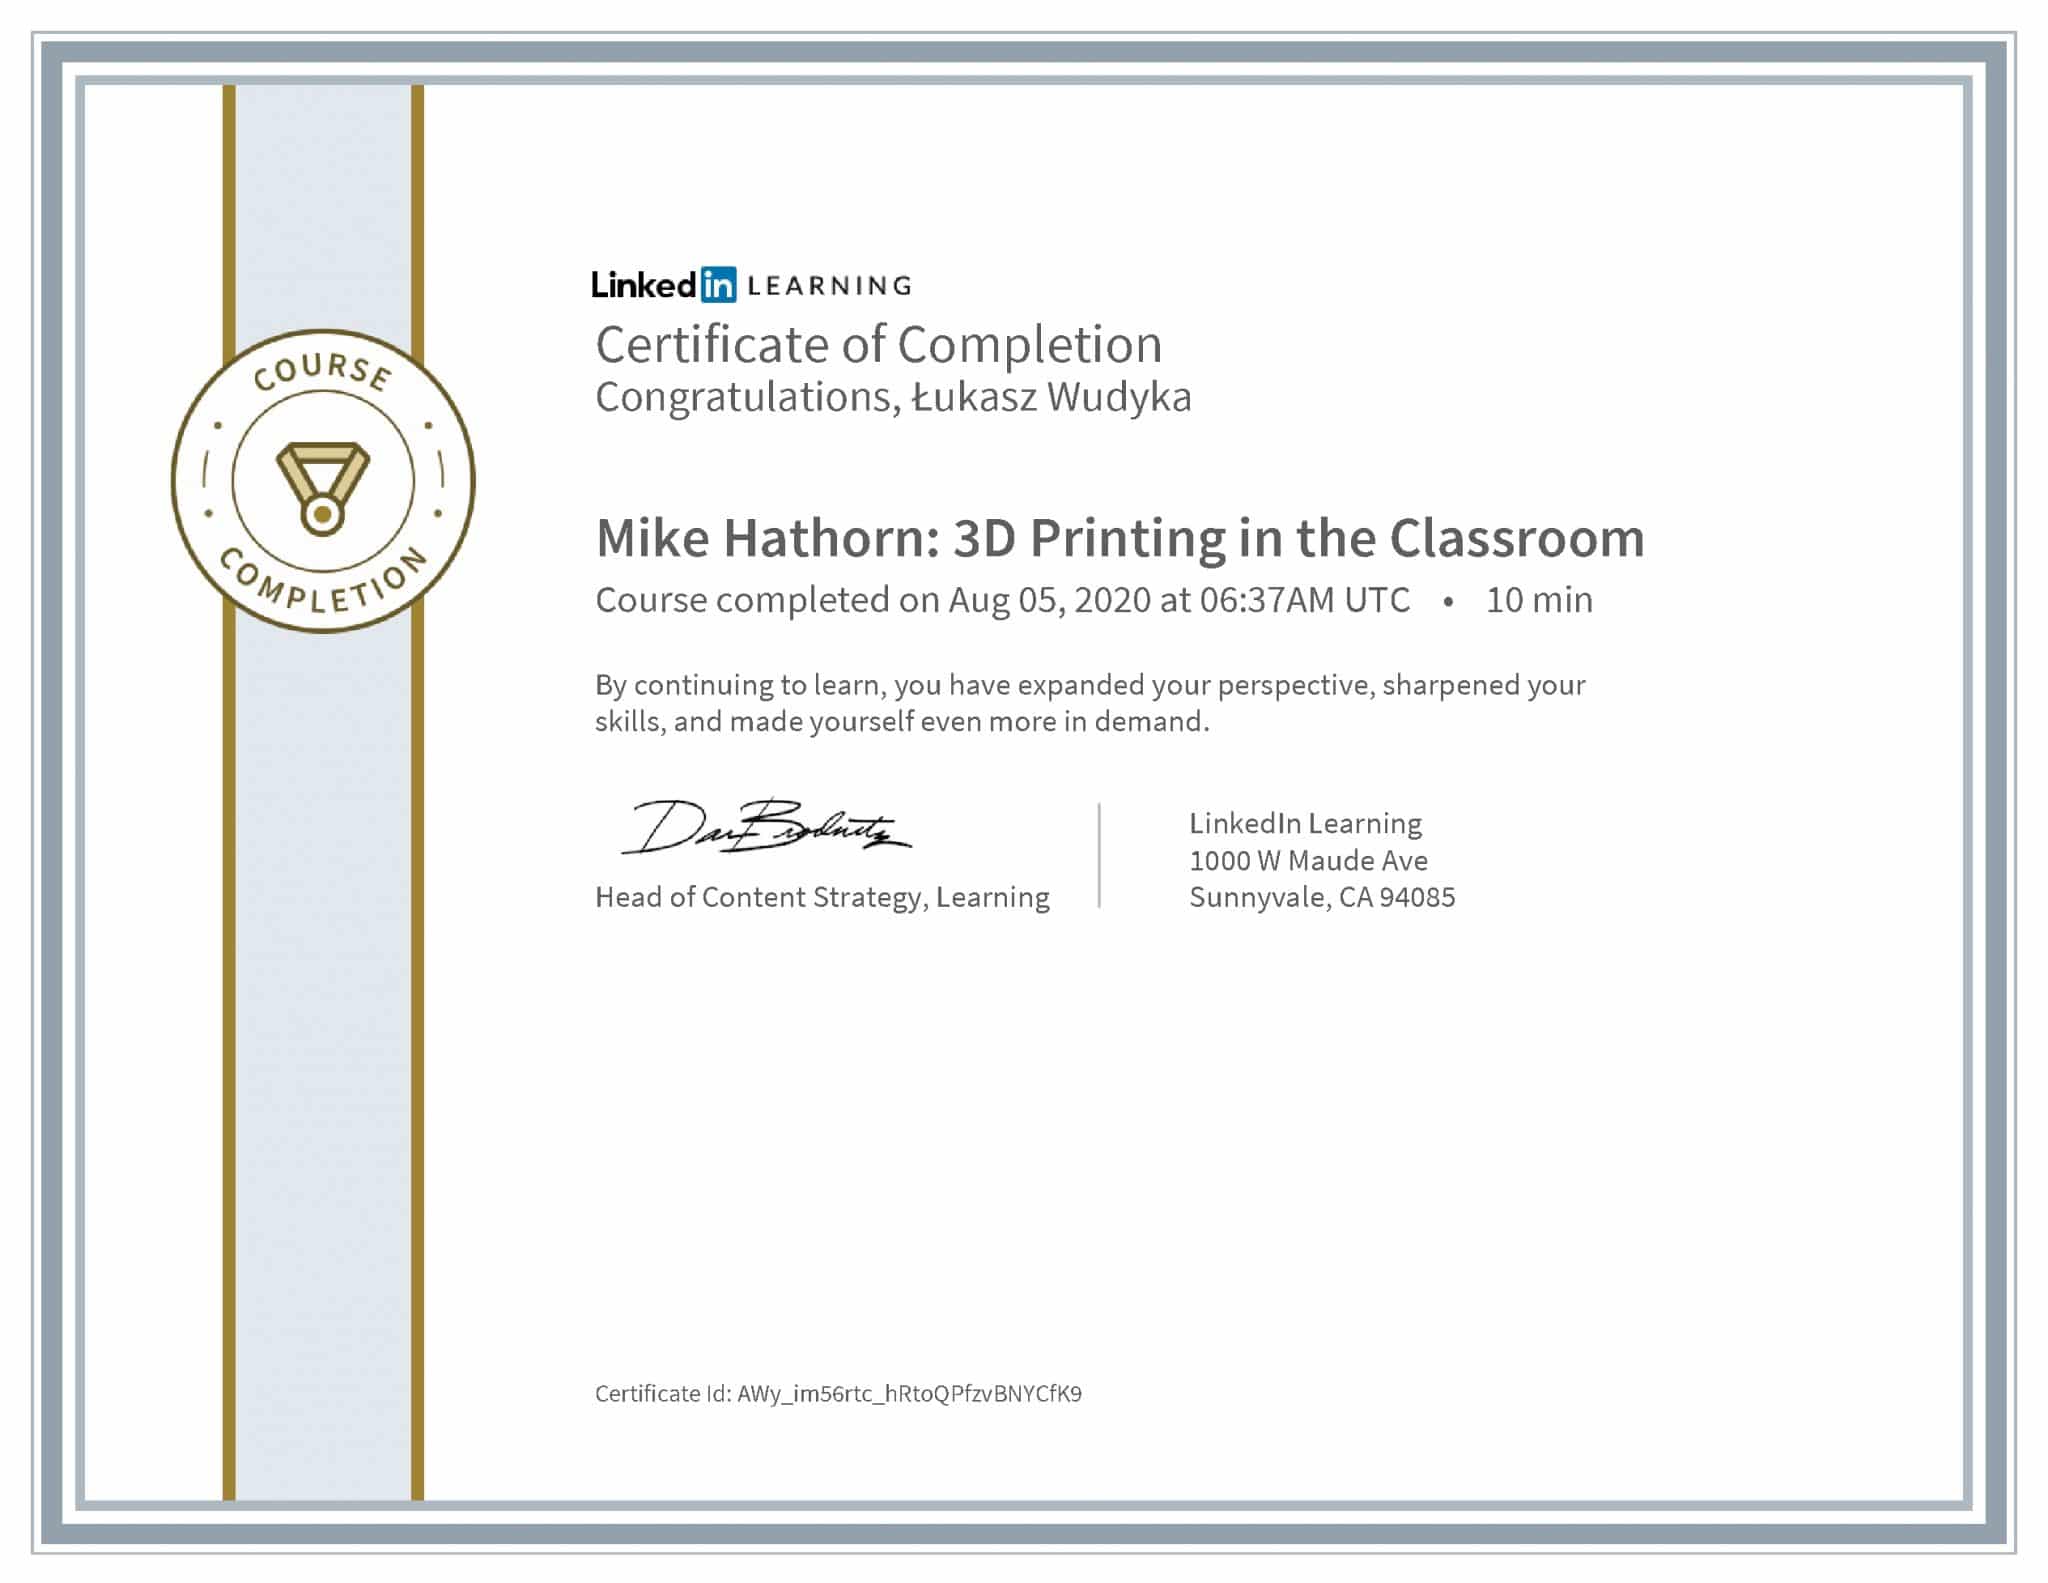 Łukasz Wudyka certyfikat LinkedIn Mike Hathorn: 3D Printing in the Classroom